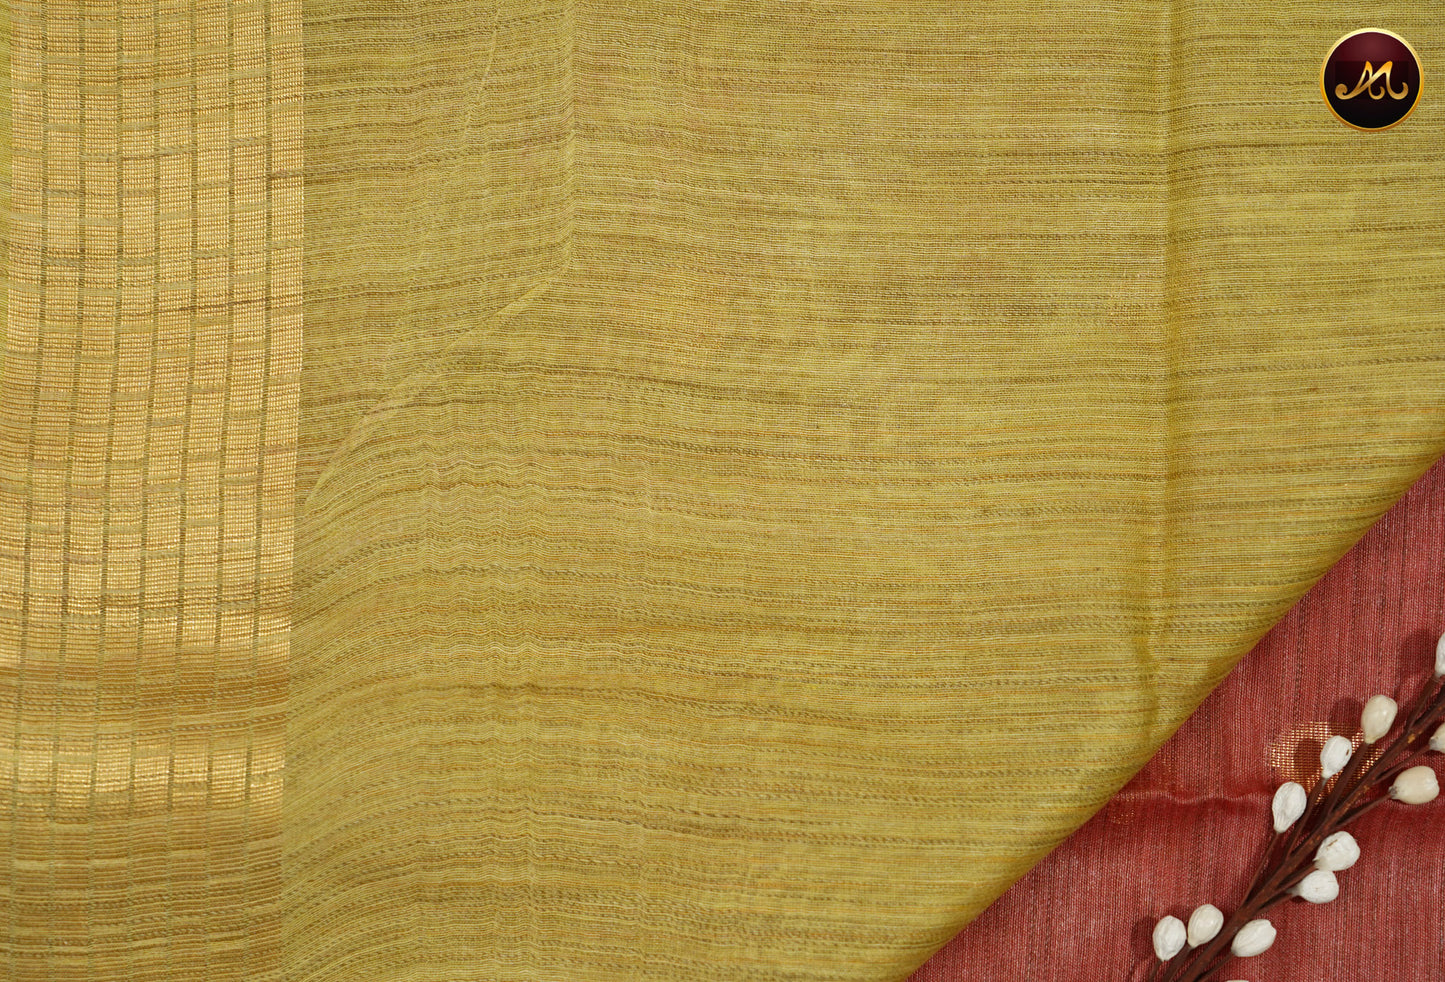 Bhagelpuri Cotton Saree in brick red and yellow combination with golden zari butta and border